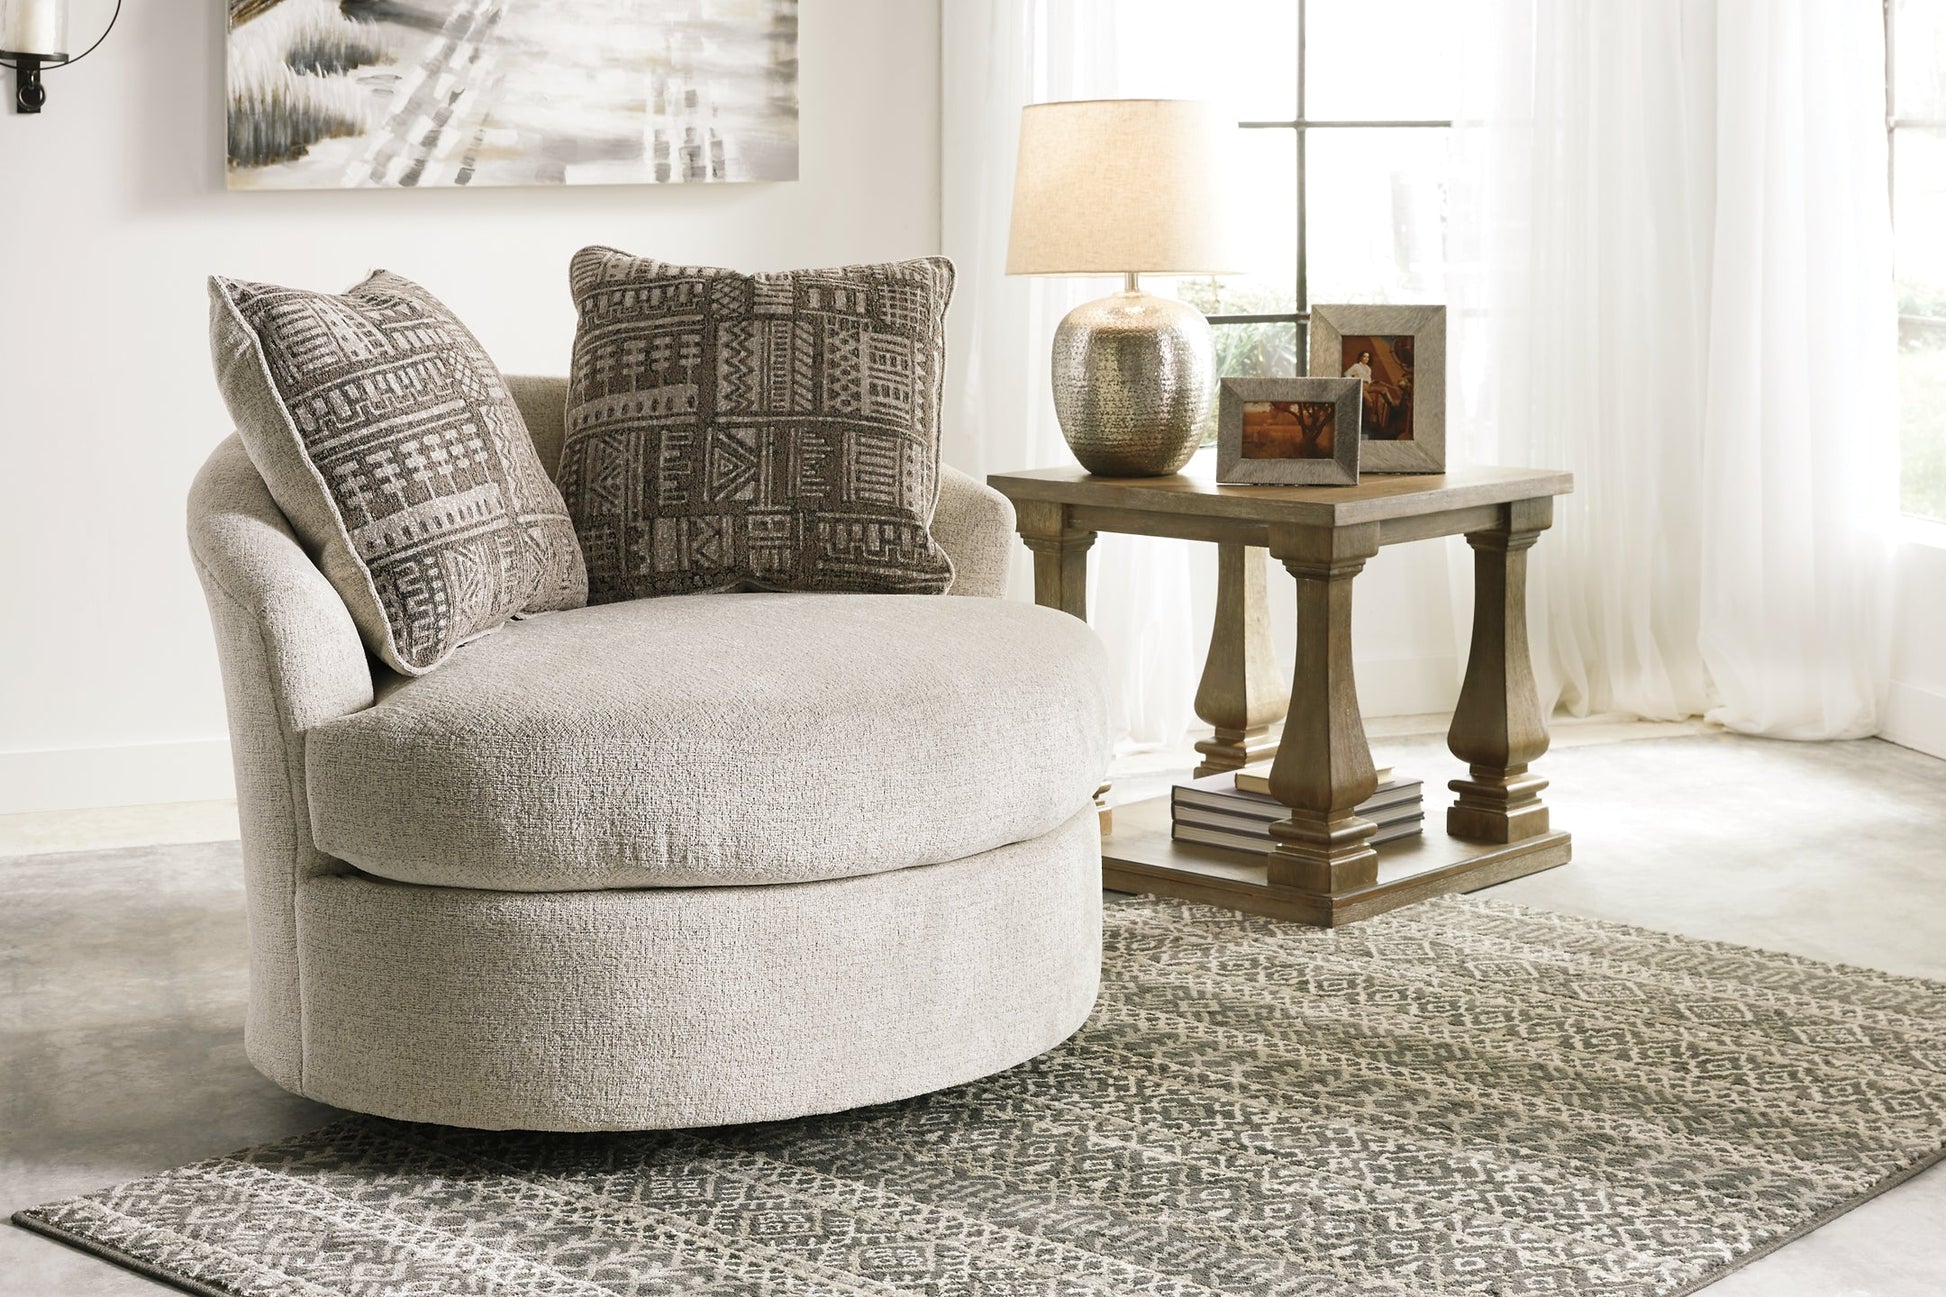 Soletren Swivel Accent Chair at Cloud 9 Mattress & Furniture furniture, home furnishing, home decor